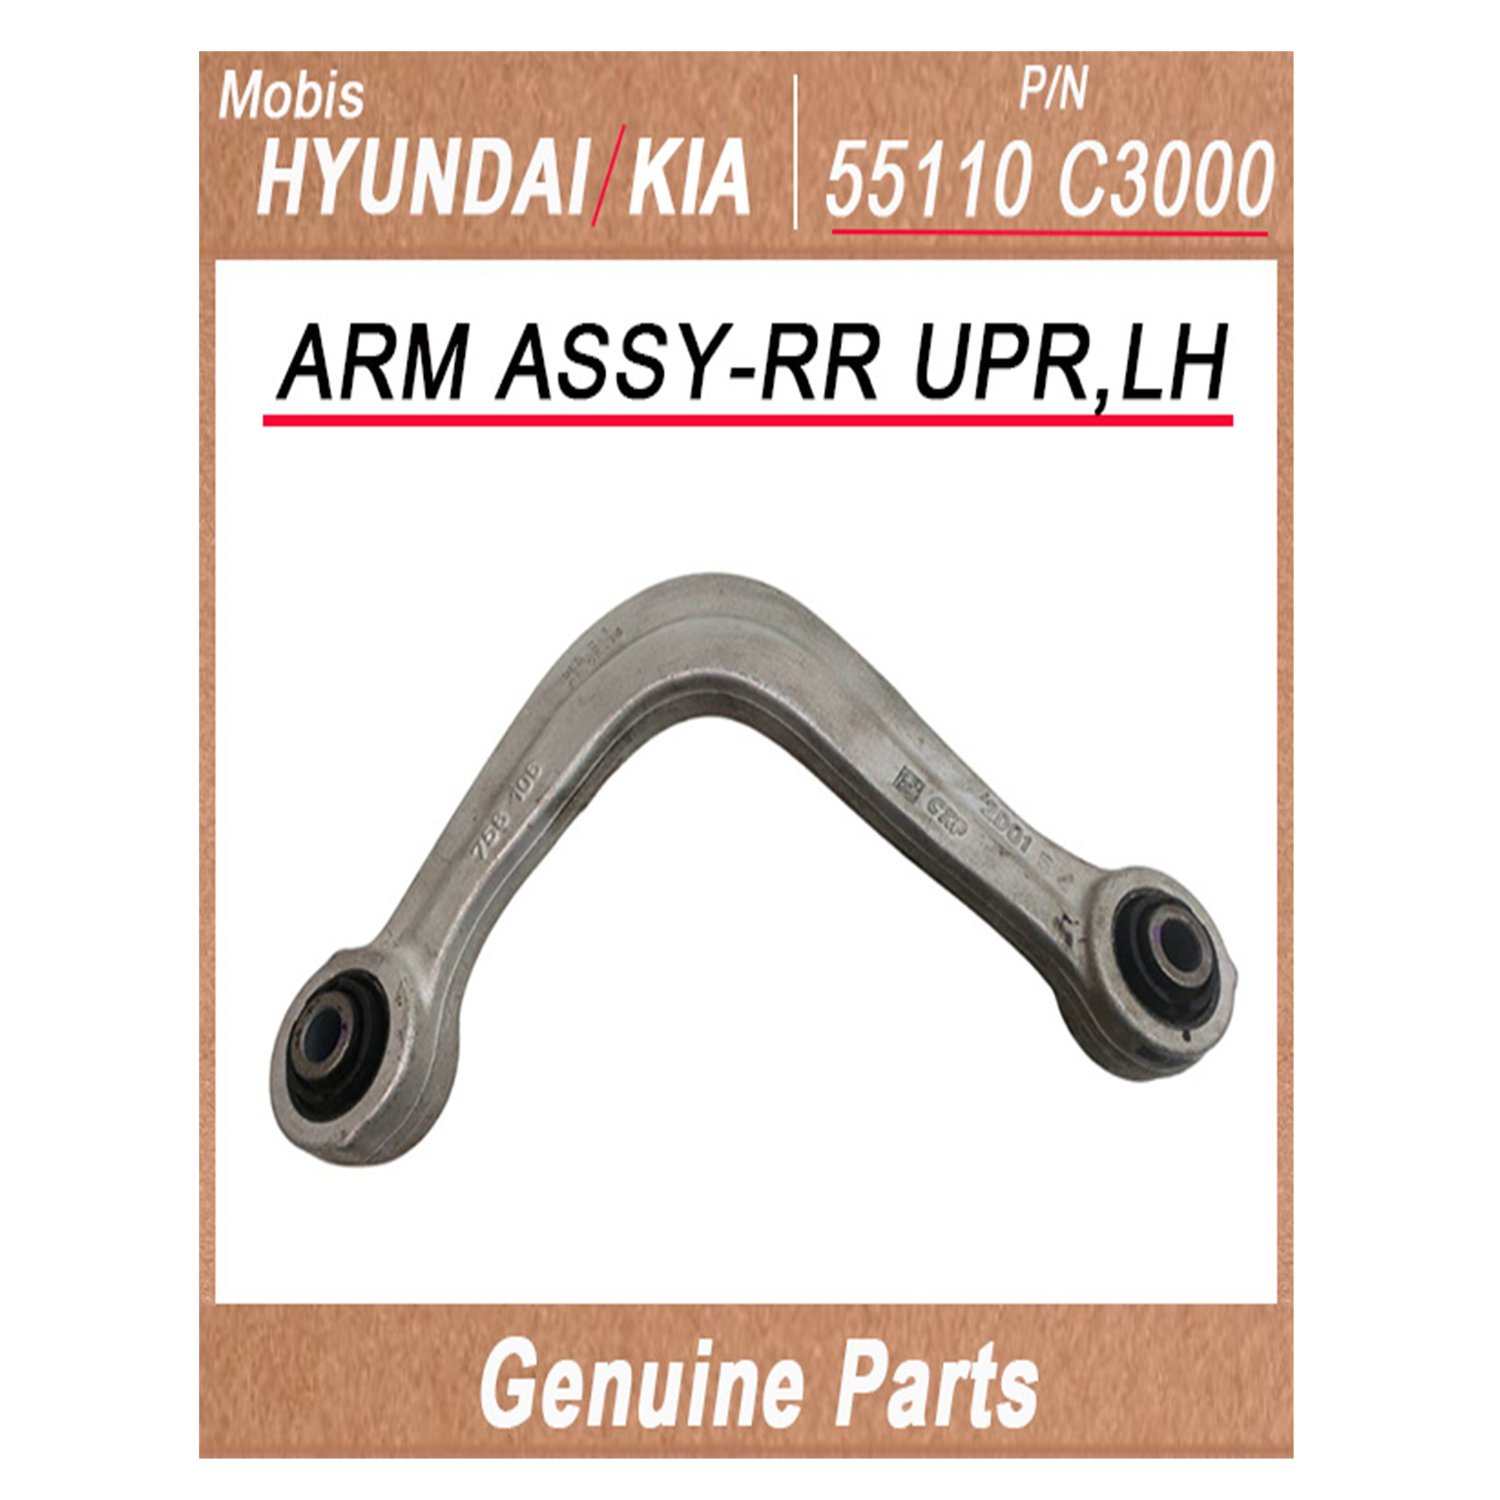 55110C3000 _ ARM ASSY_RR UPR_LH _ Genuine Korean Automotive Spare Parts _ Hyundai Kia _Mobis_